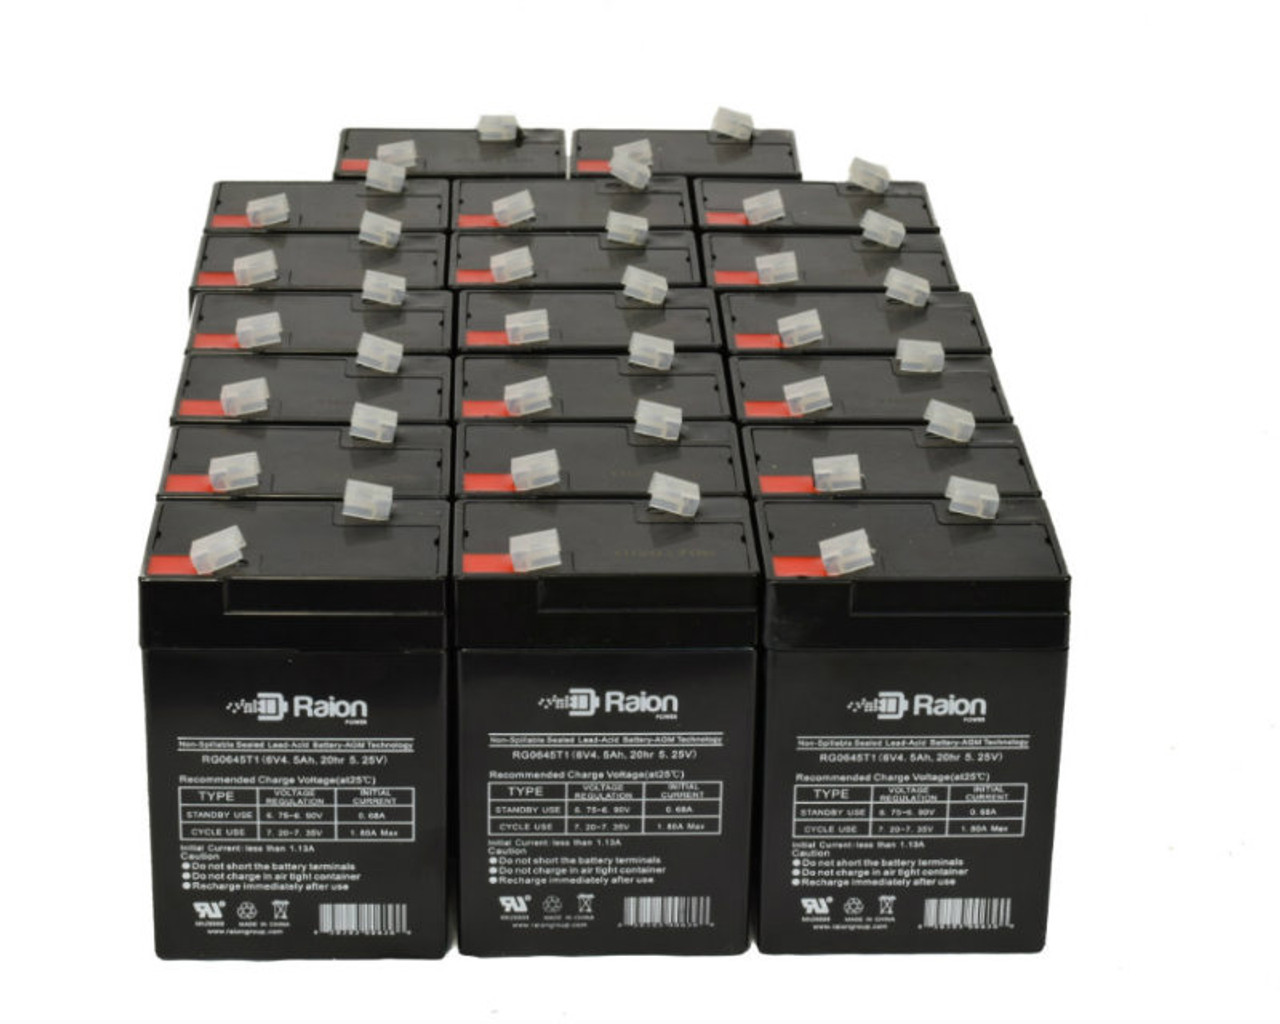 Raion Power 6V 4.5Ah Replacement Emergency Light Battery for Prescolite 88 - 20 Pack